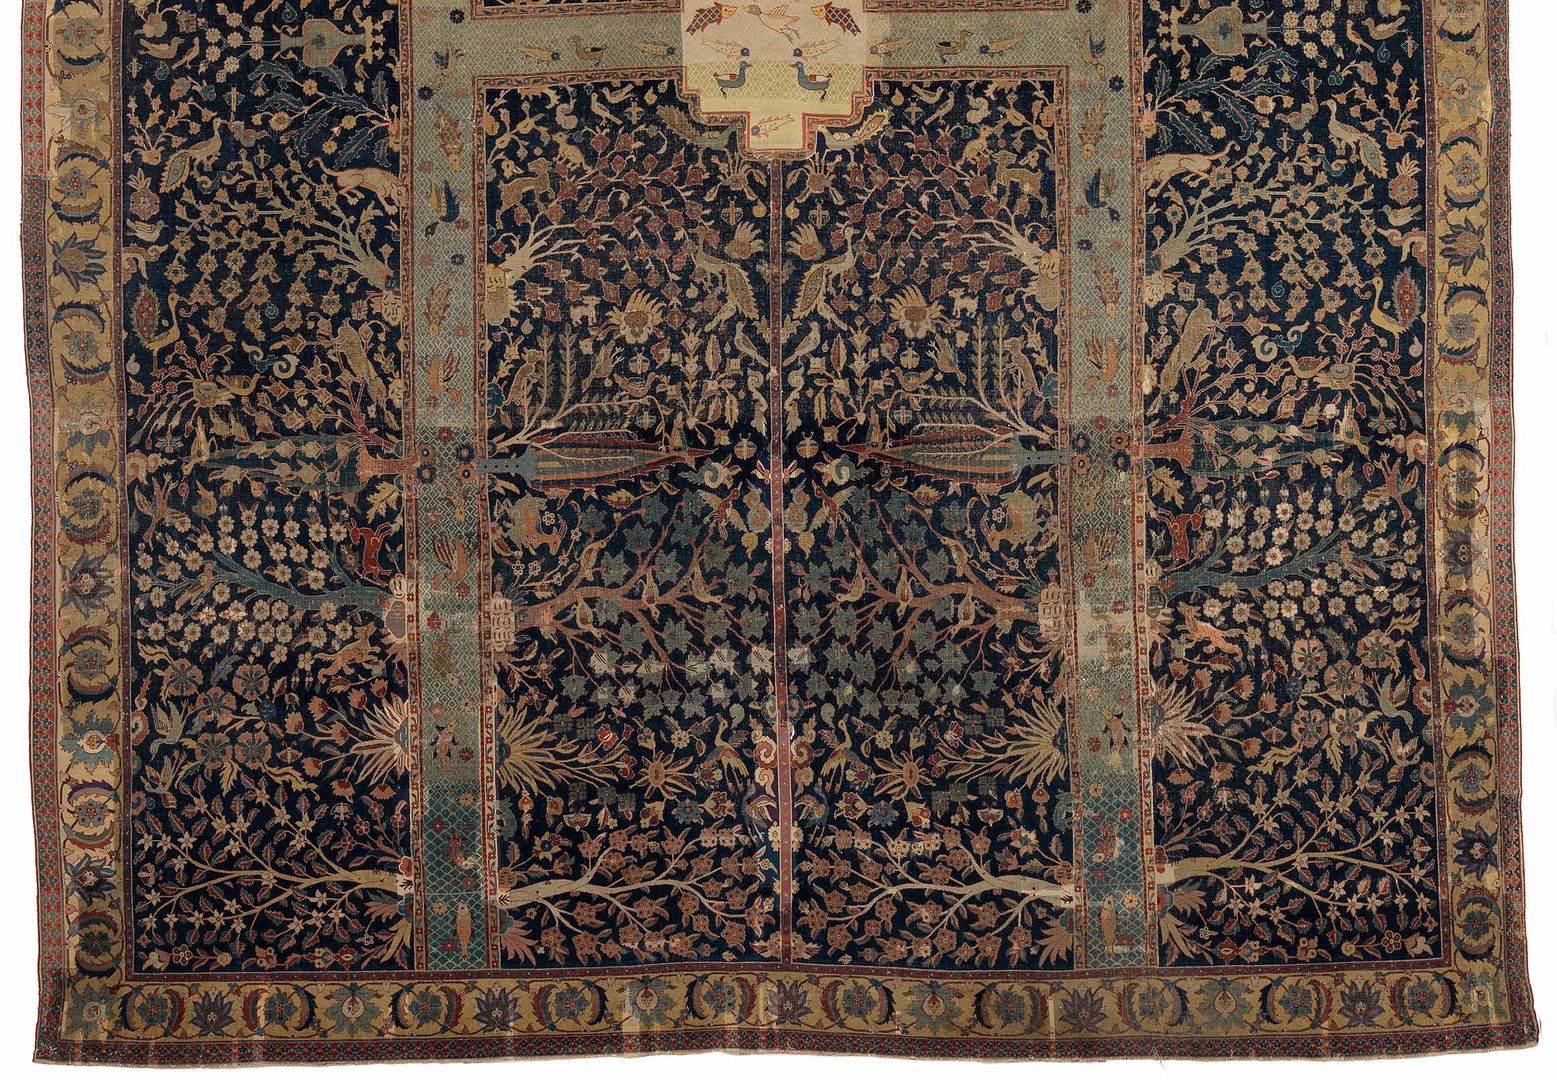 Lower half of Wagner carpet